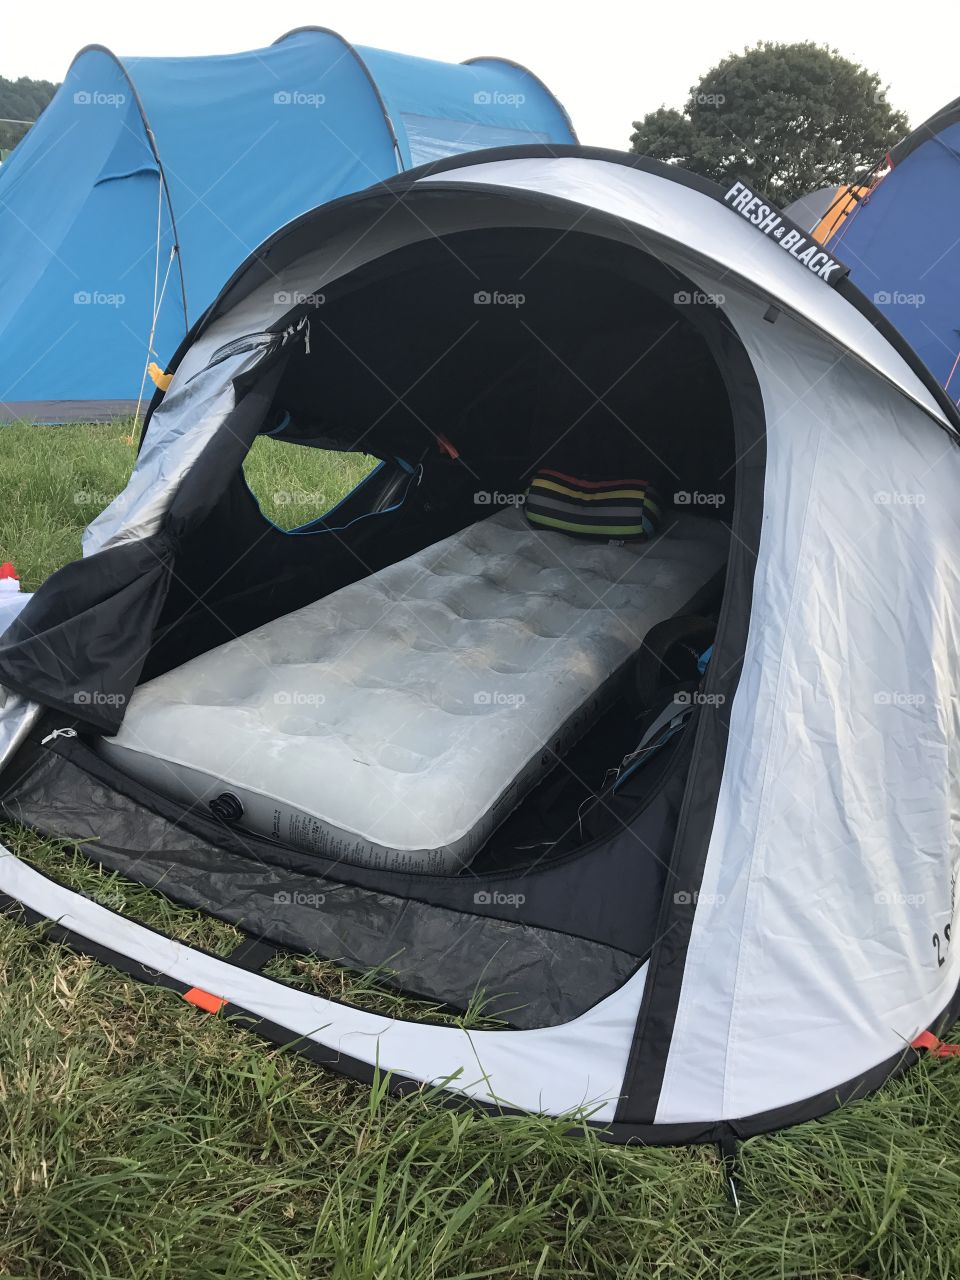 Pop up tent